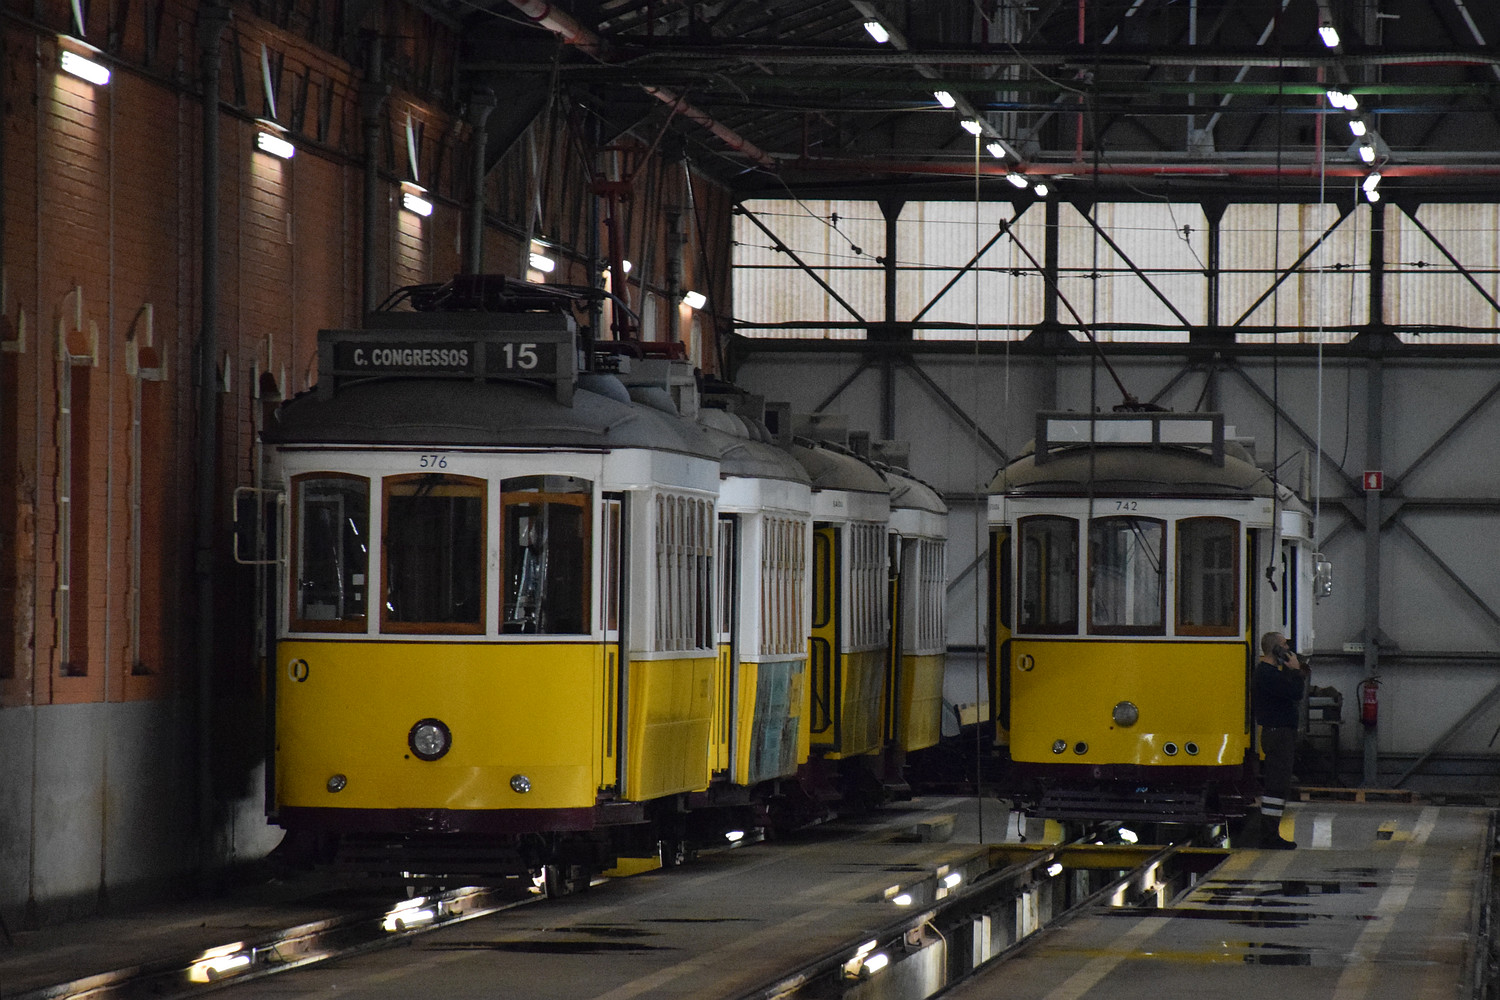 Лиссабон, Carris 2-axle motorcar (Remodelado) № 576; Лиссабон, Carris 2-axle motorcar (Remodelado) № 742; Лиссабон — Трамвай — Estação de Santo Amaro (депо)